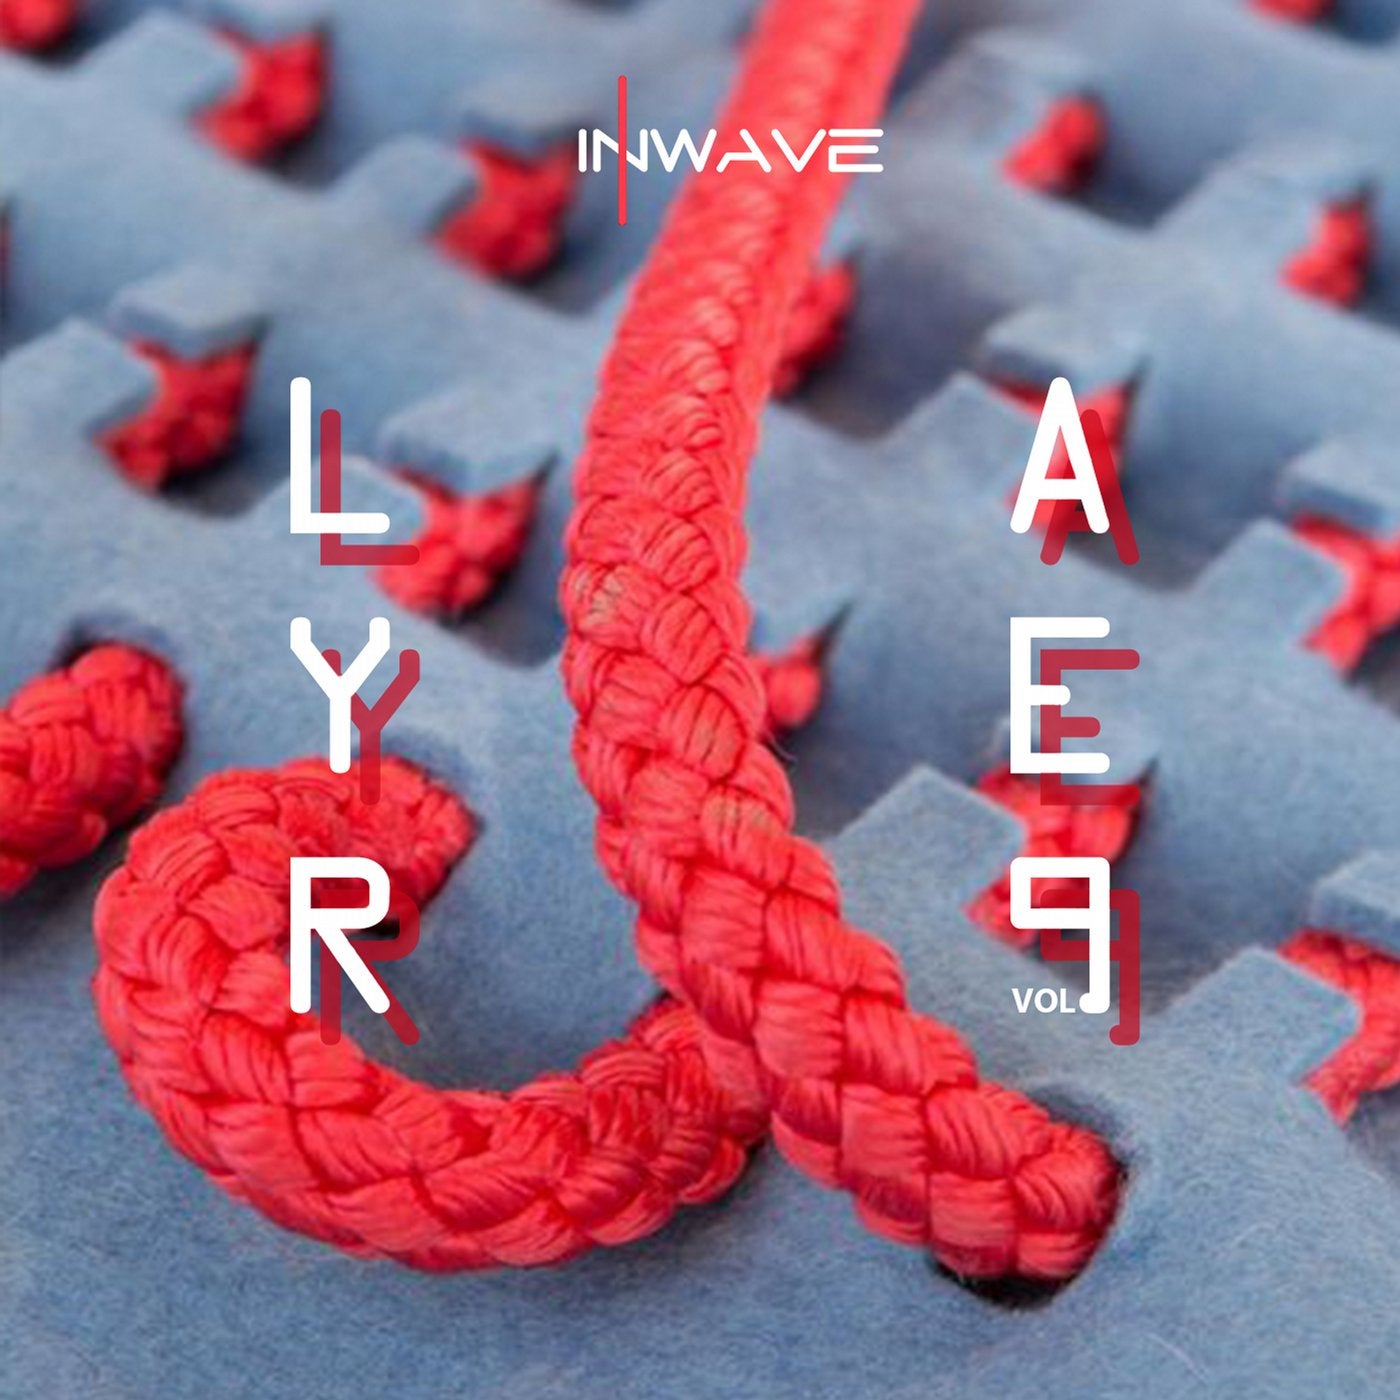 Inwave Layer Vol.9